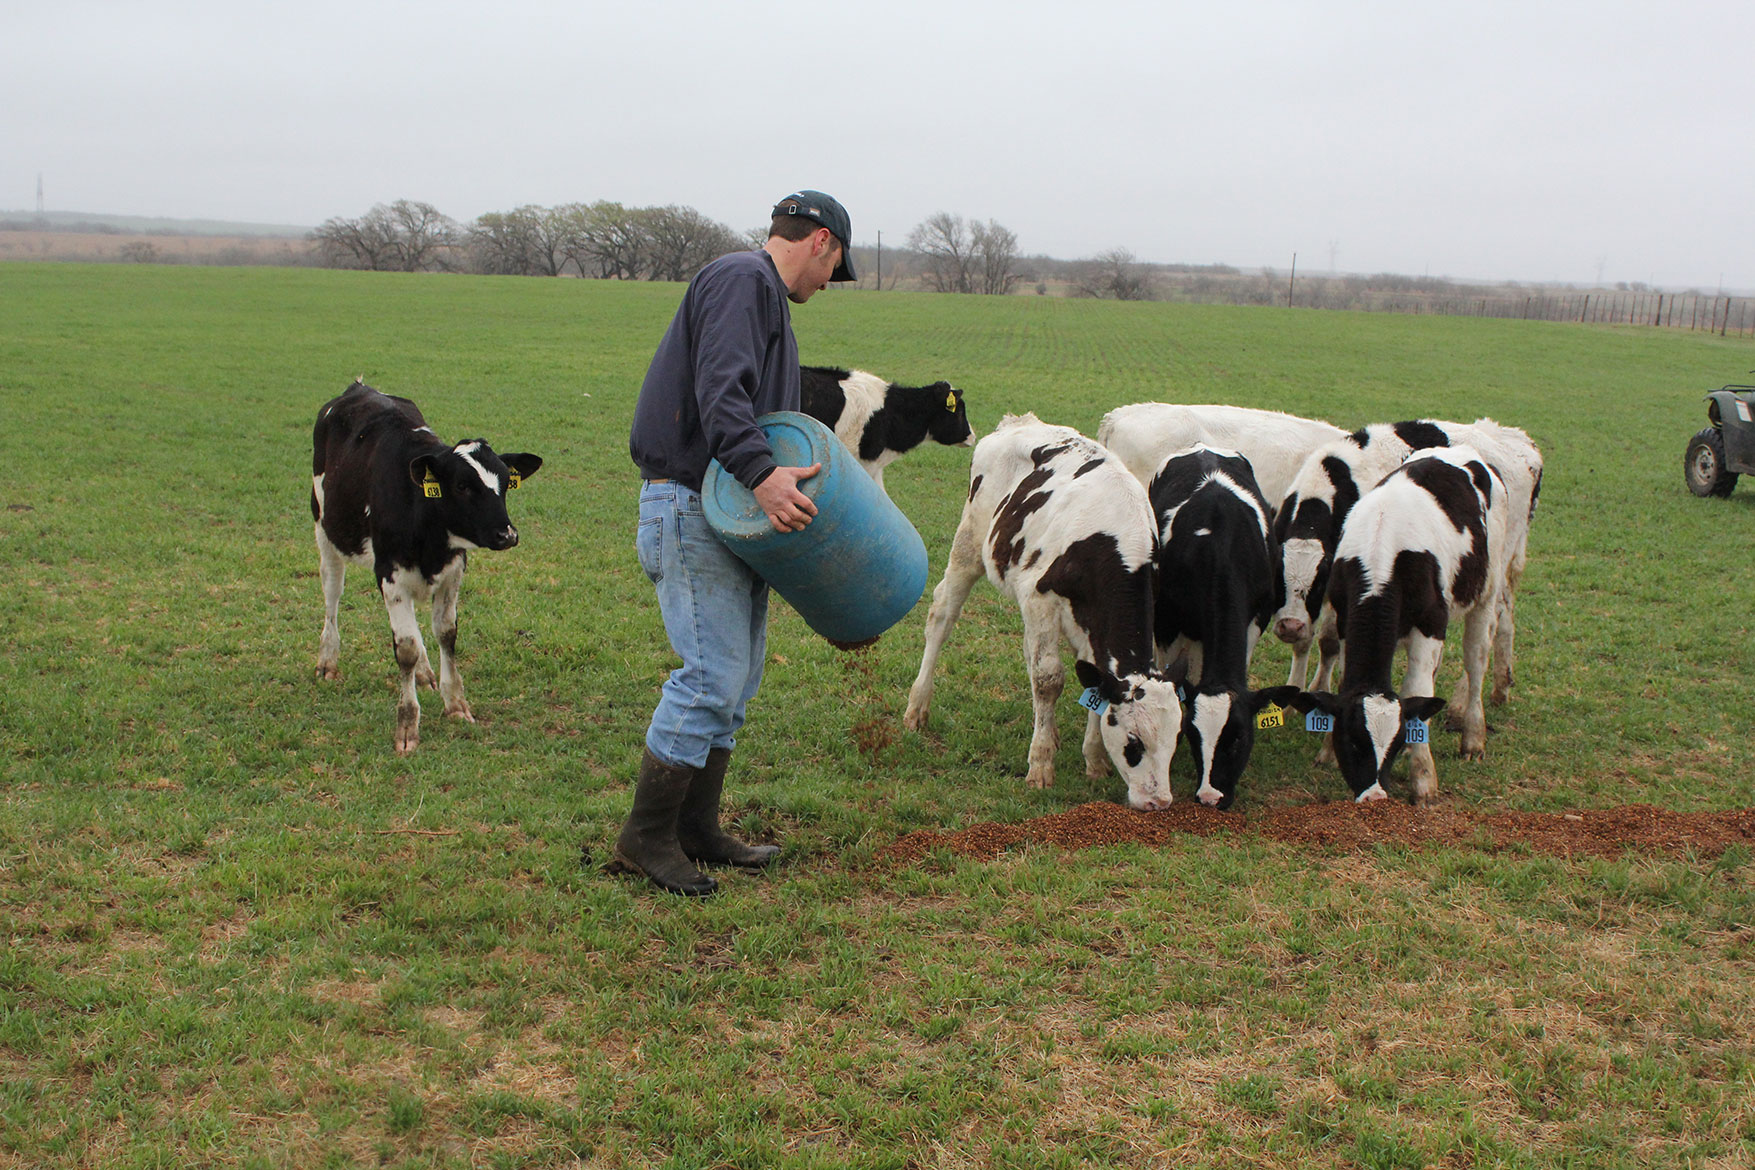 Feeding the heifers on pasture some extra grain.